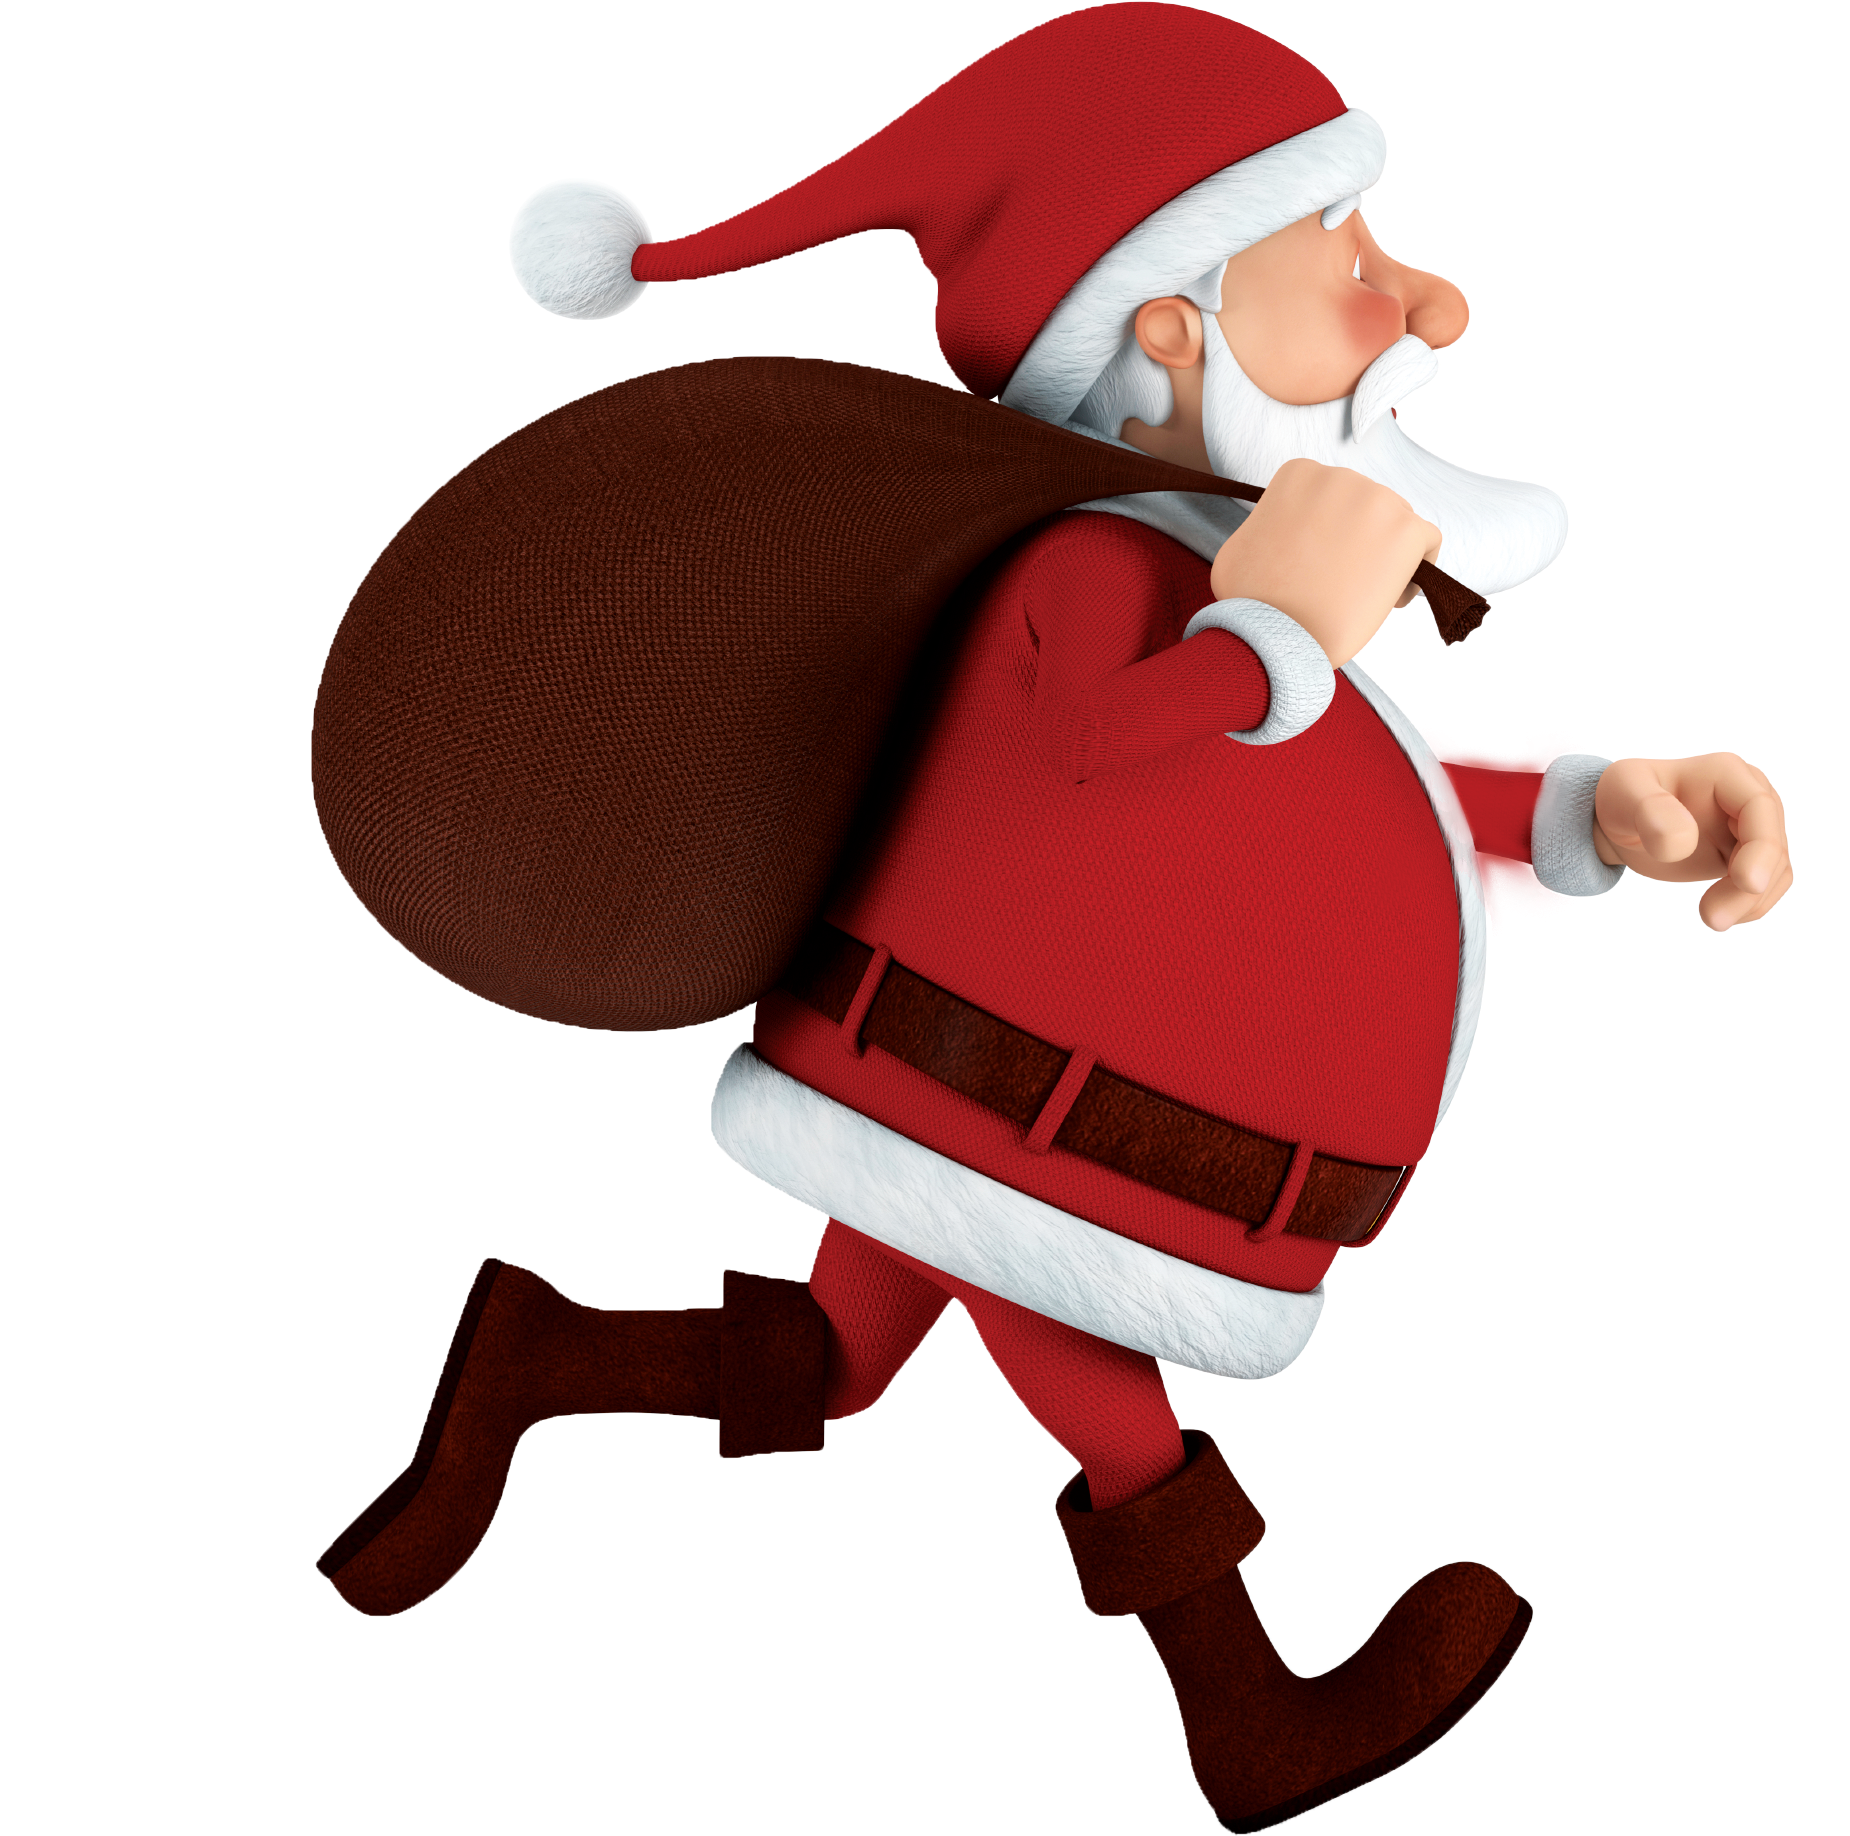 A Cartoon Of A Santa Claus Carrying A Sack